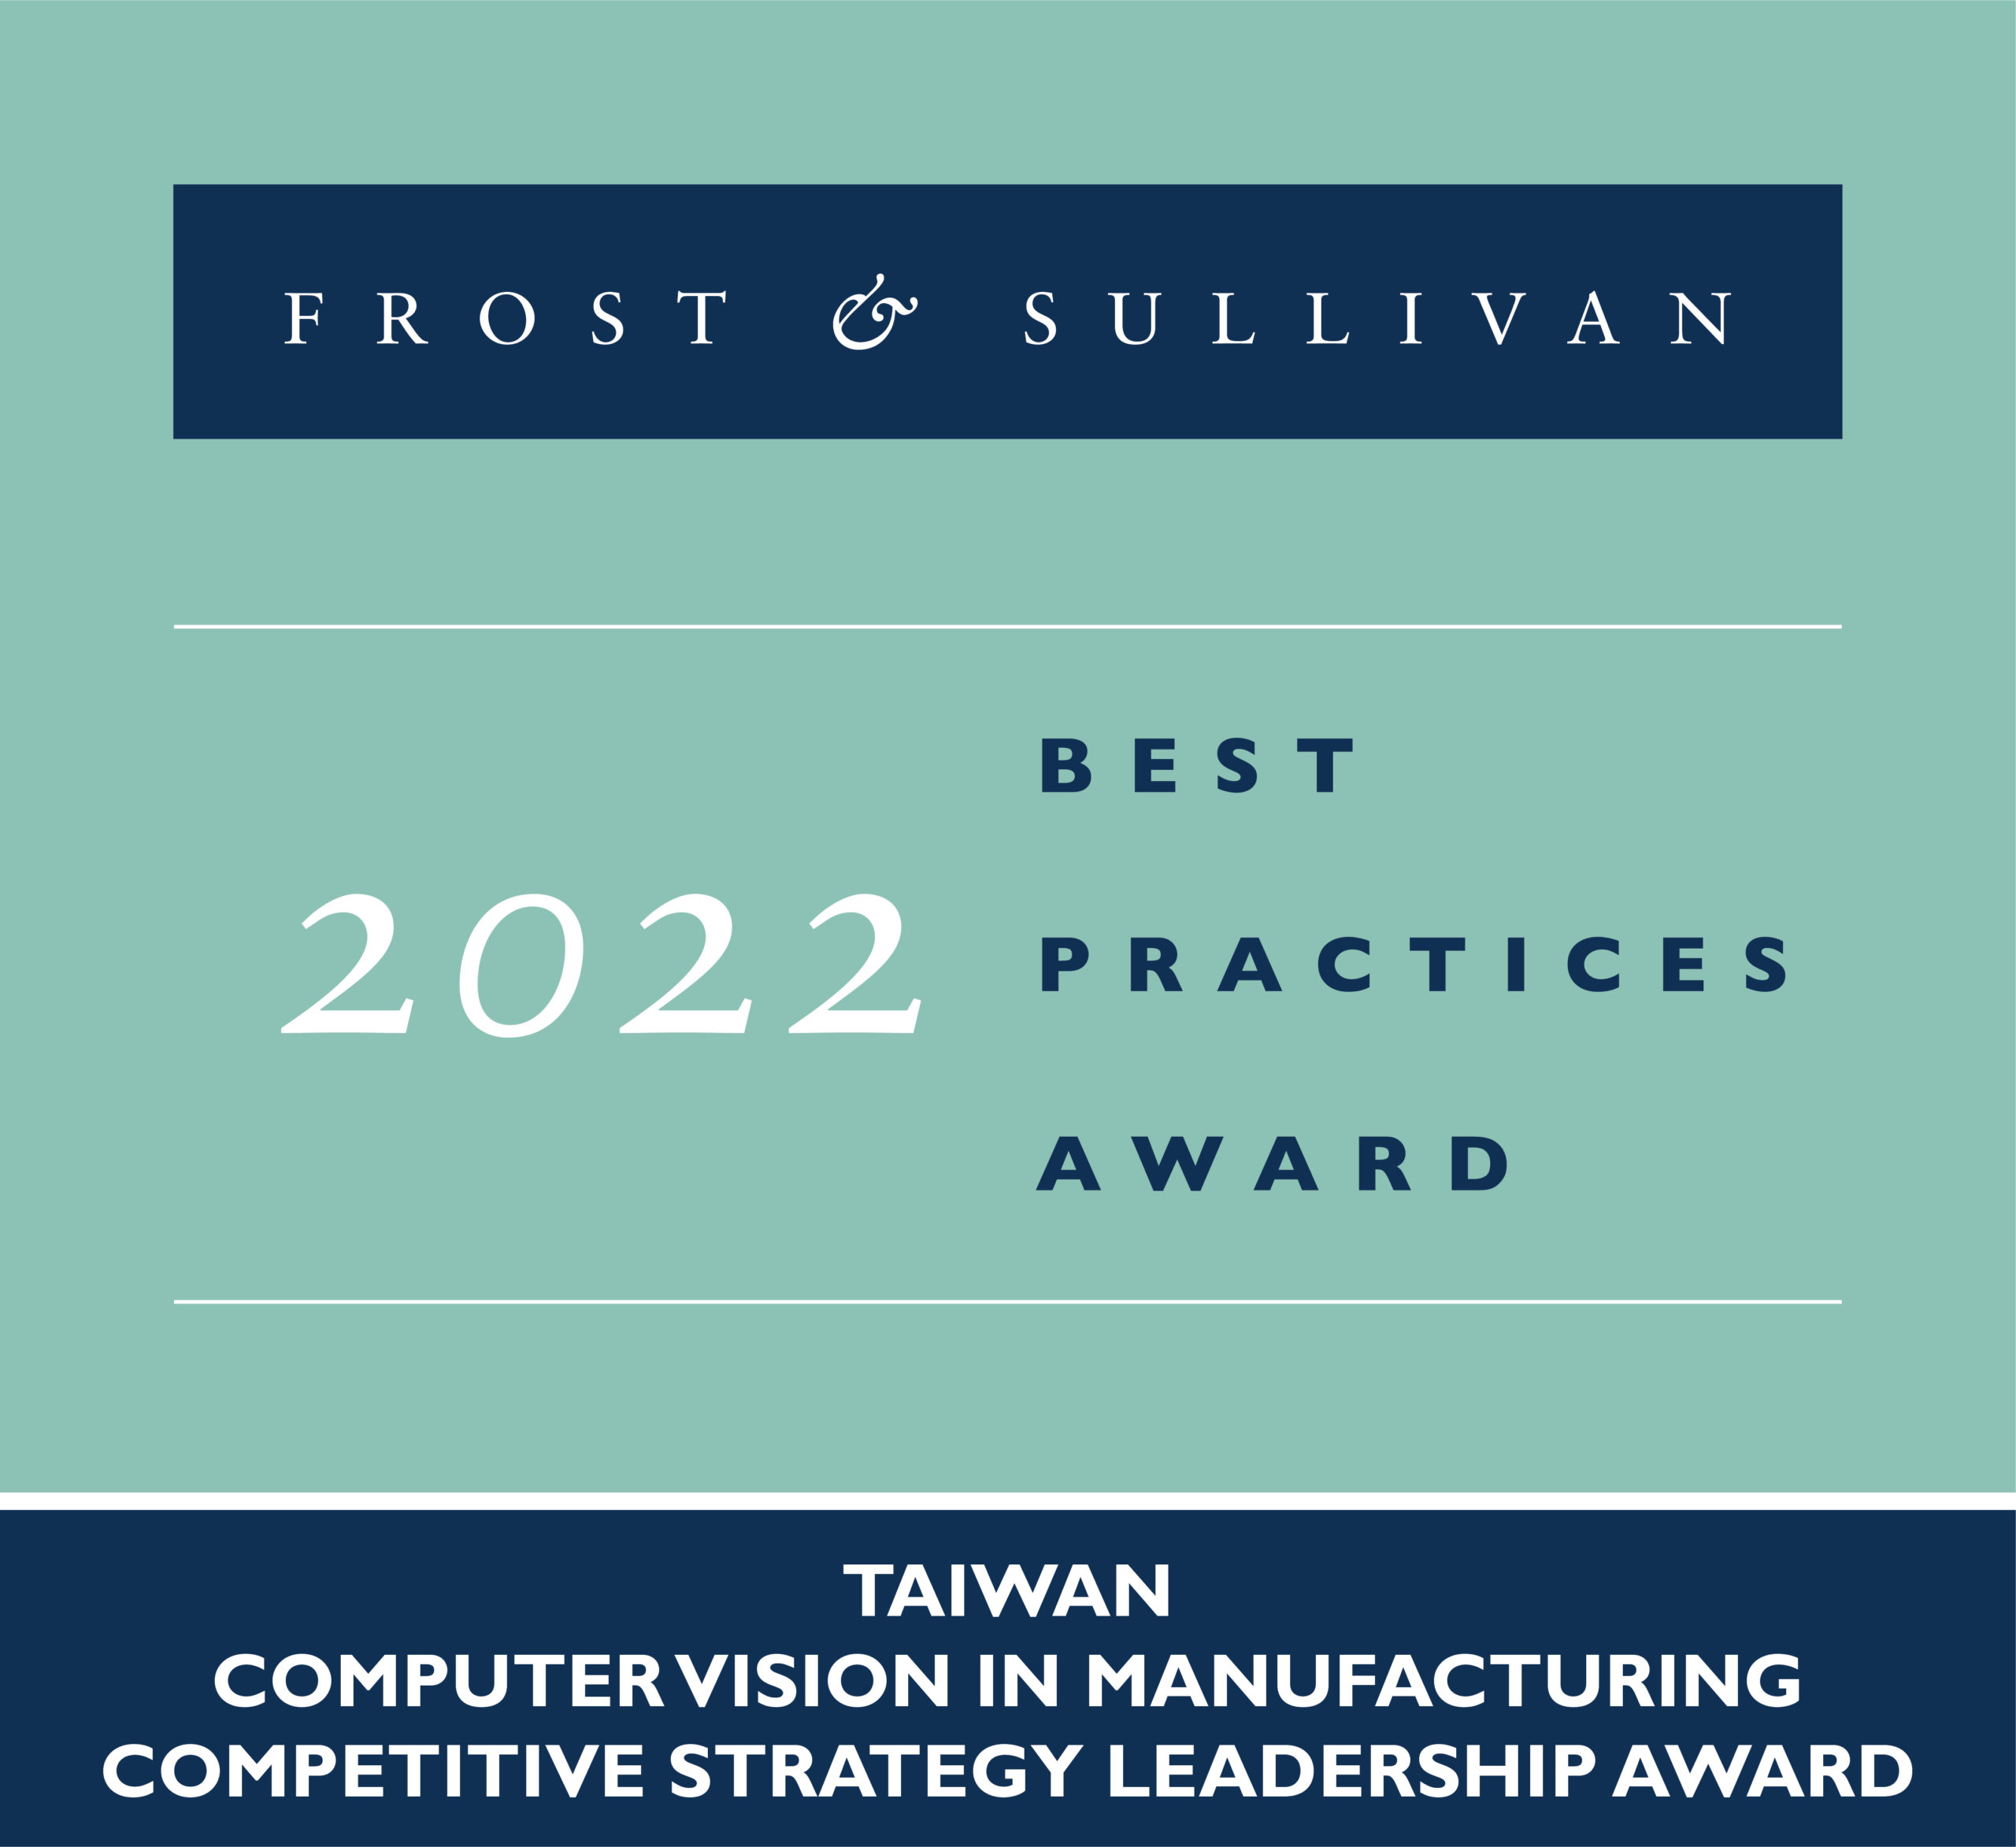 PowerArena榮獲2022年度Frost & Sullivan「台灣製造業電腦視覺競爭戰略領導獎」